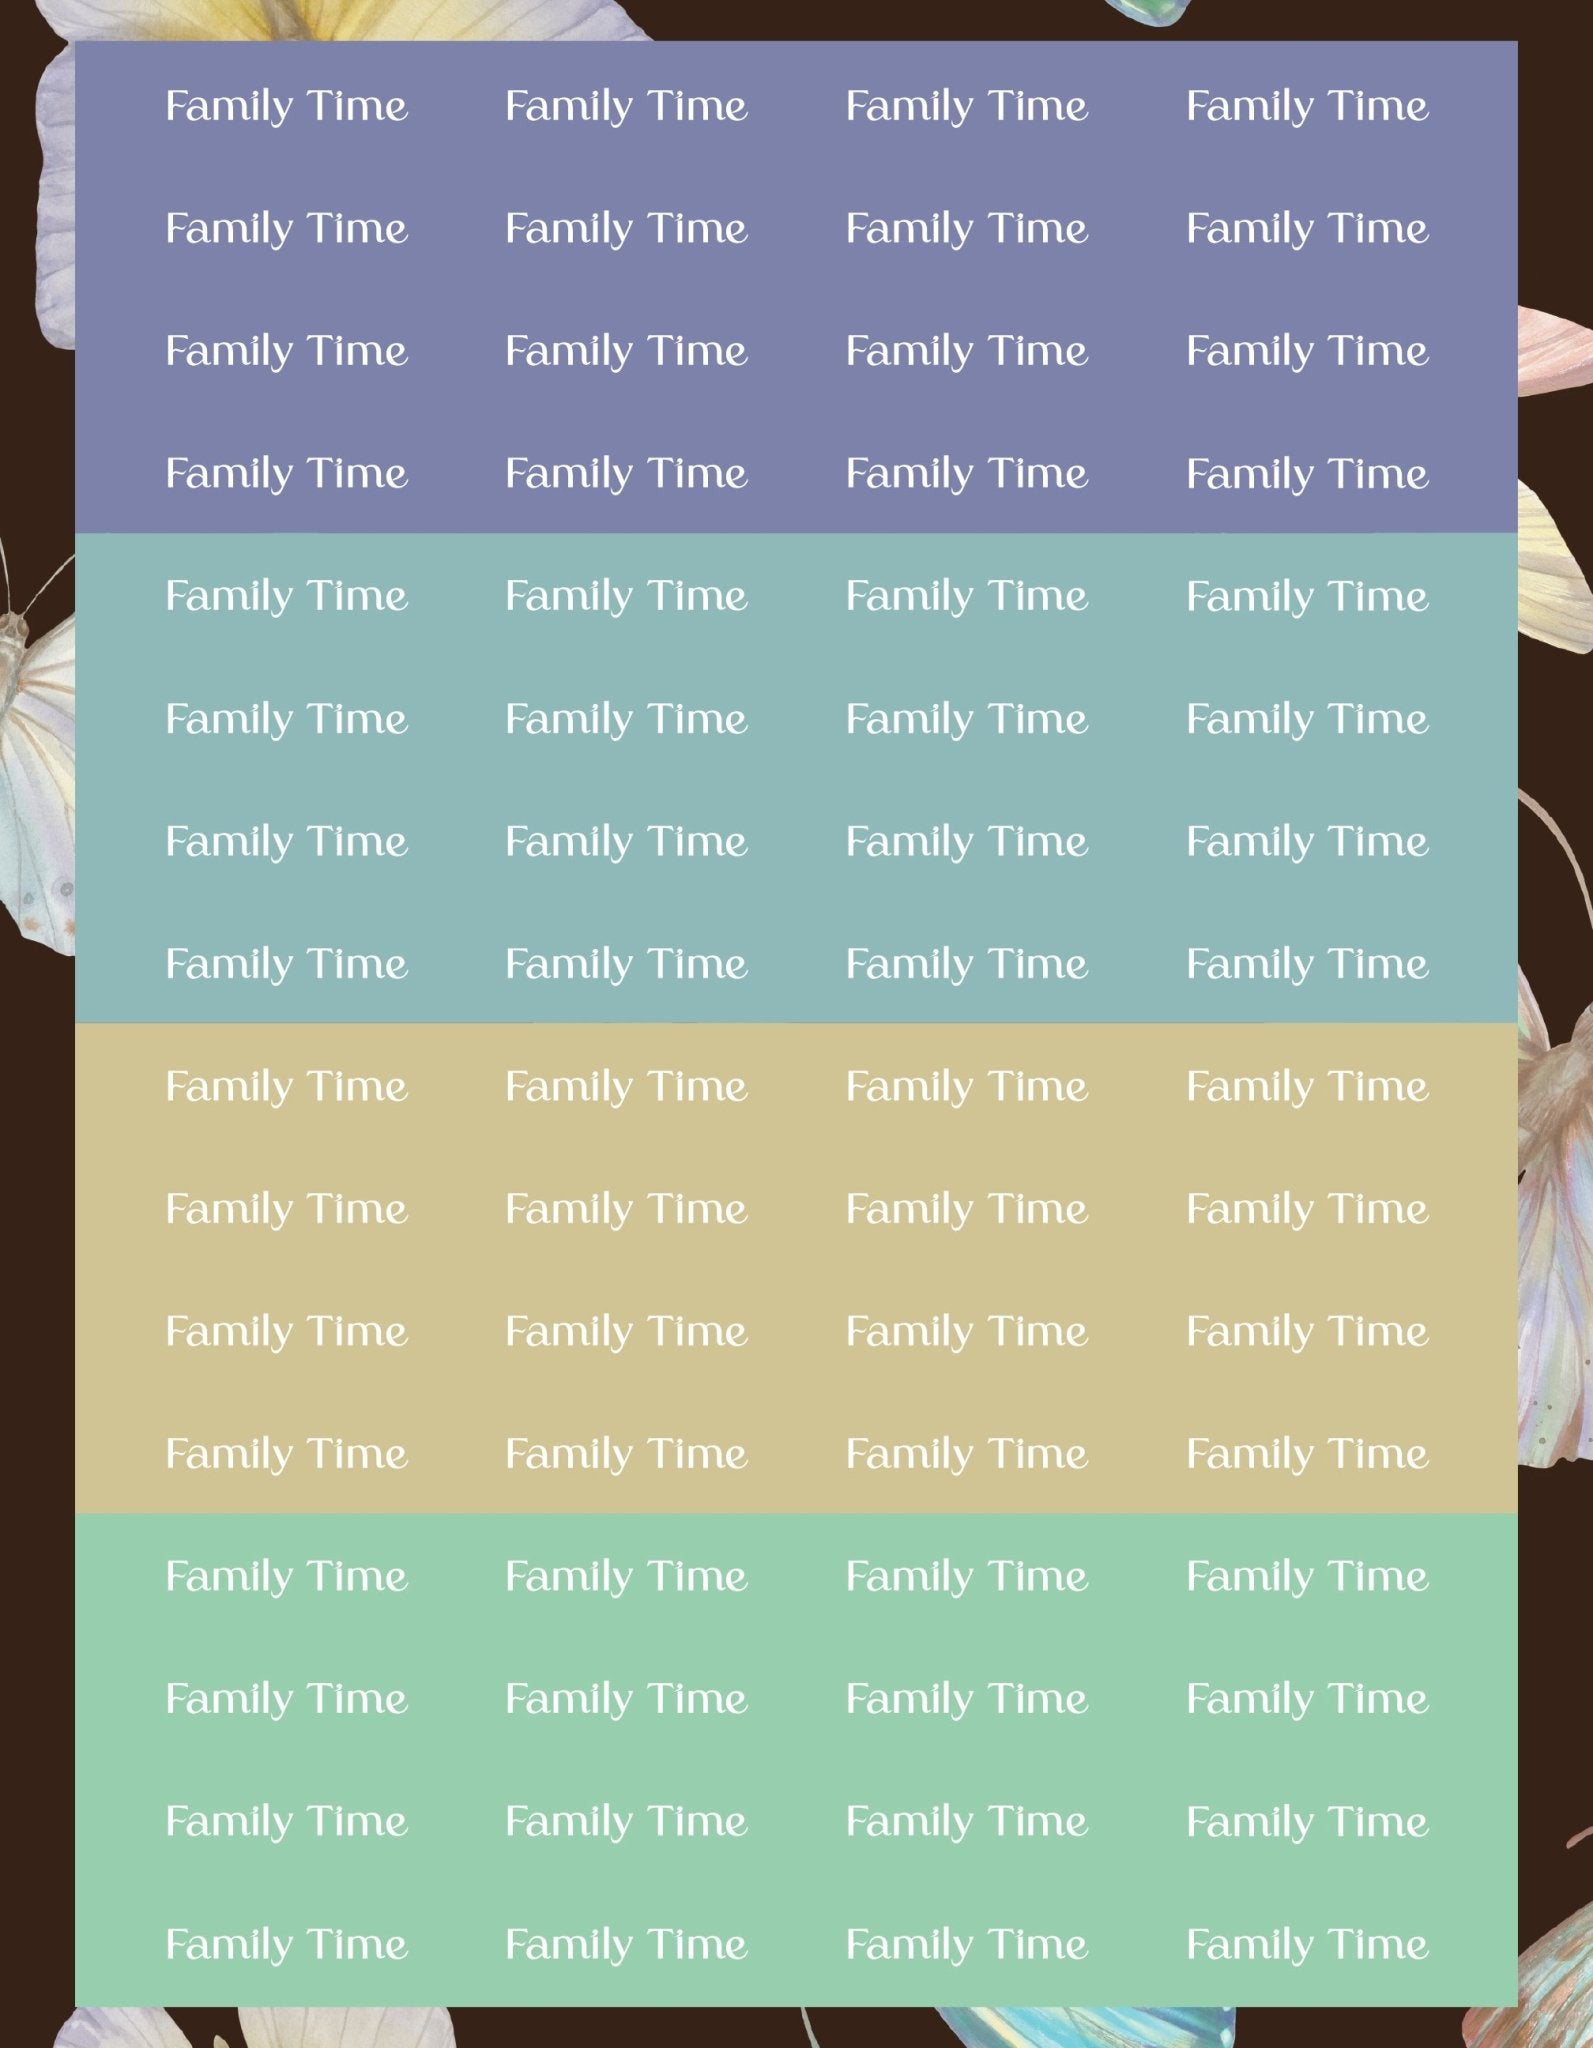 Family Time Sticker Sheets - 9 Designs/Colors - Colibri Paper Co